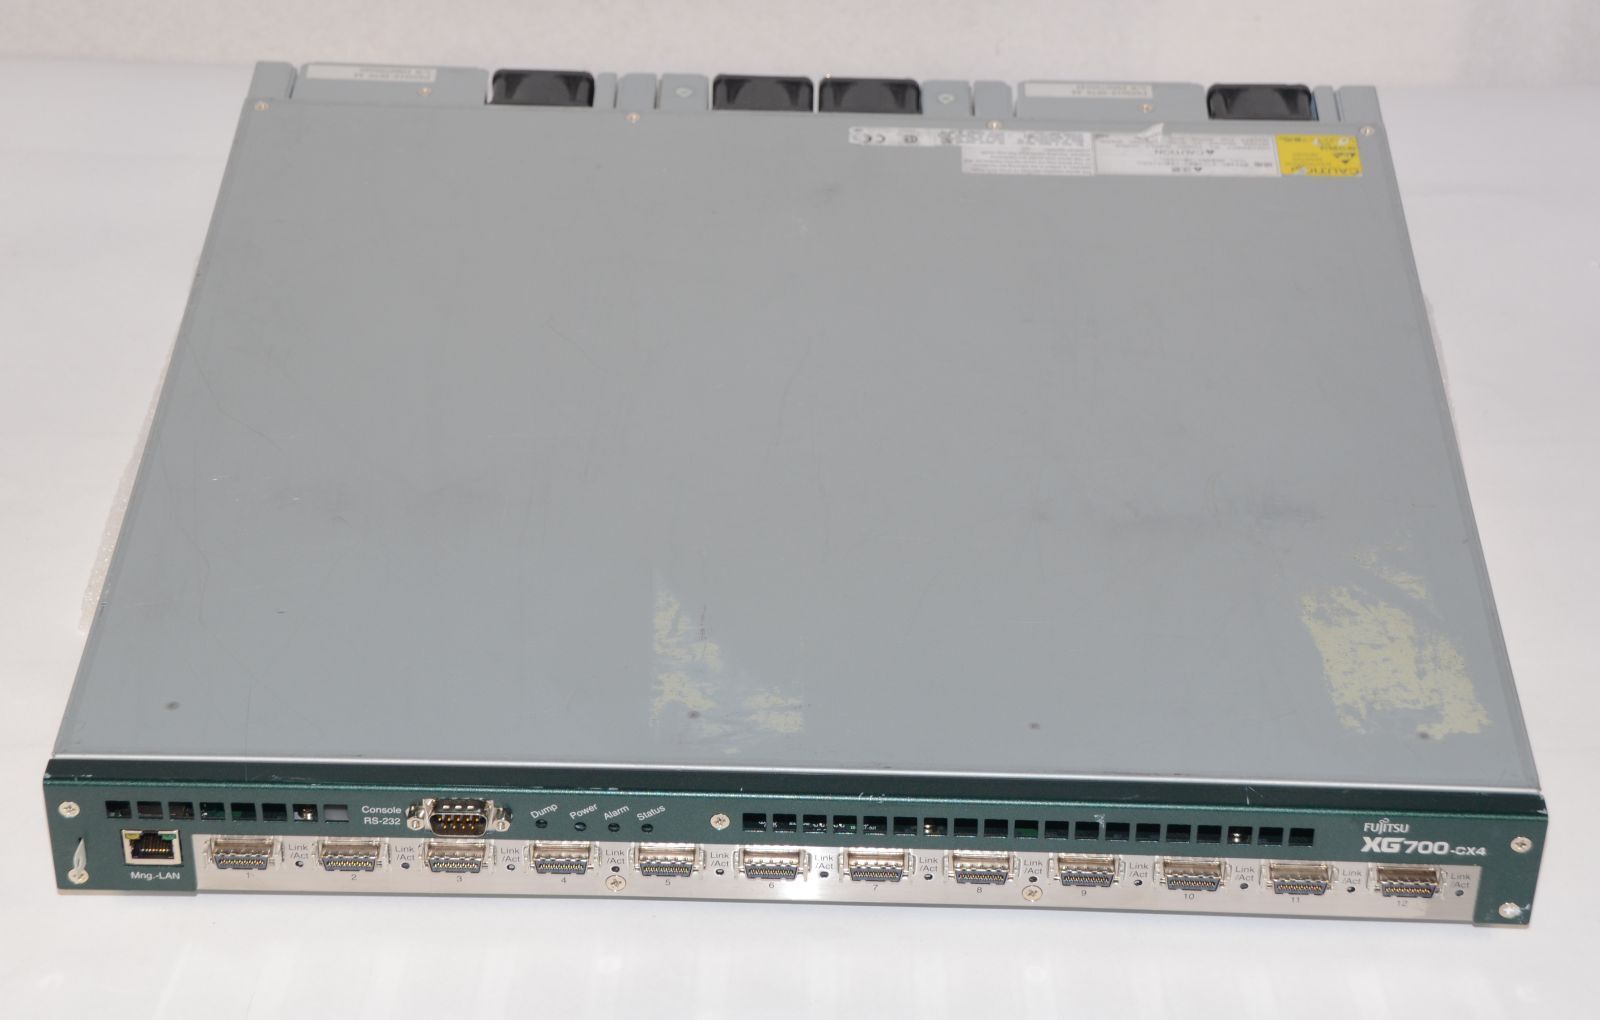 FUJITSU XG700-CX4 10GB 12-PORT Ethernet SWITCH PD-XG700FB PA03500-B201